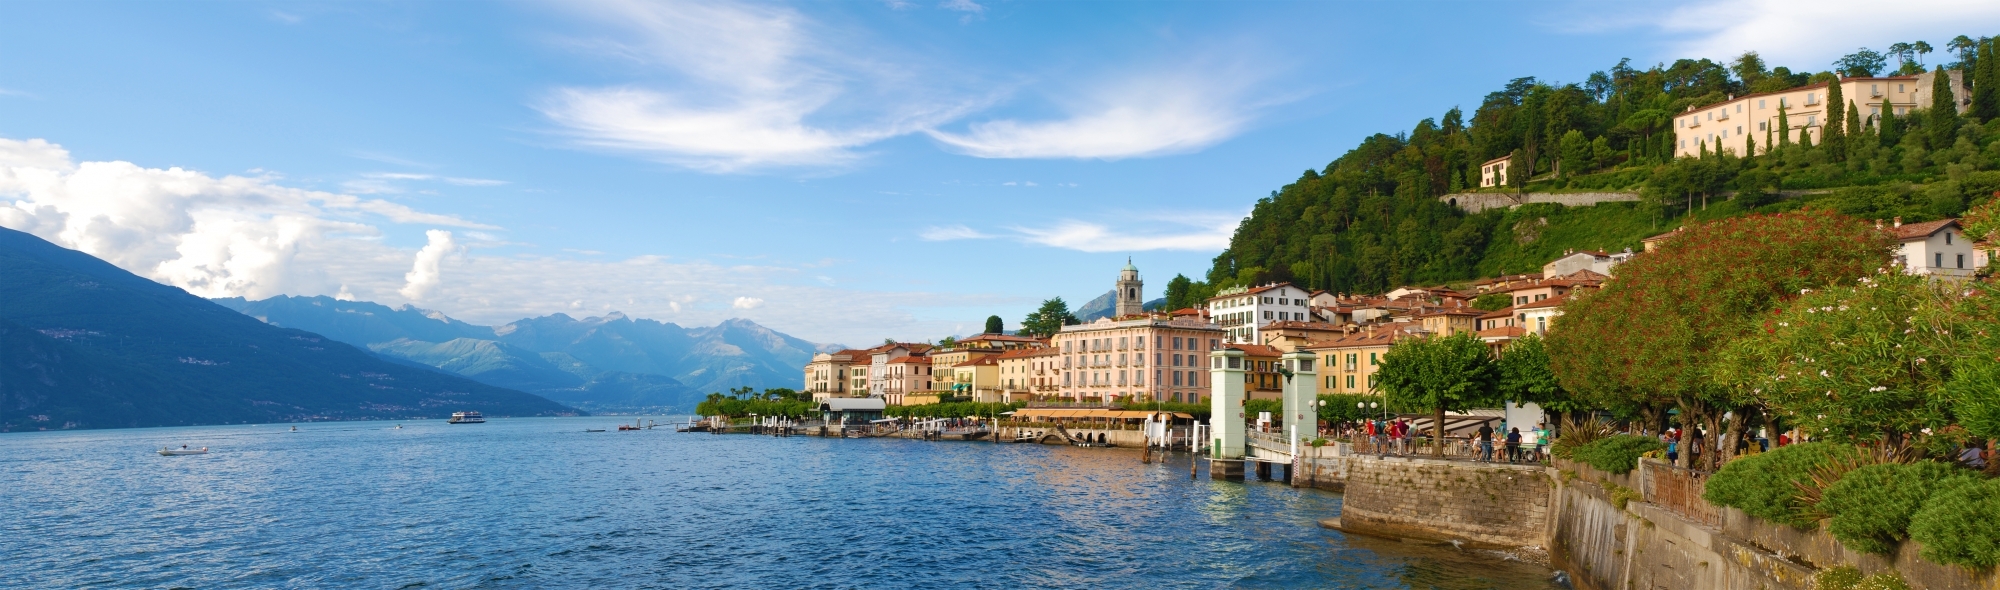 Noleggio Infiniti a Lago di Como